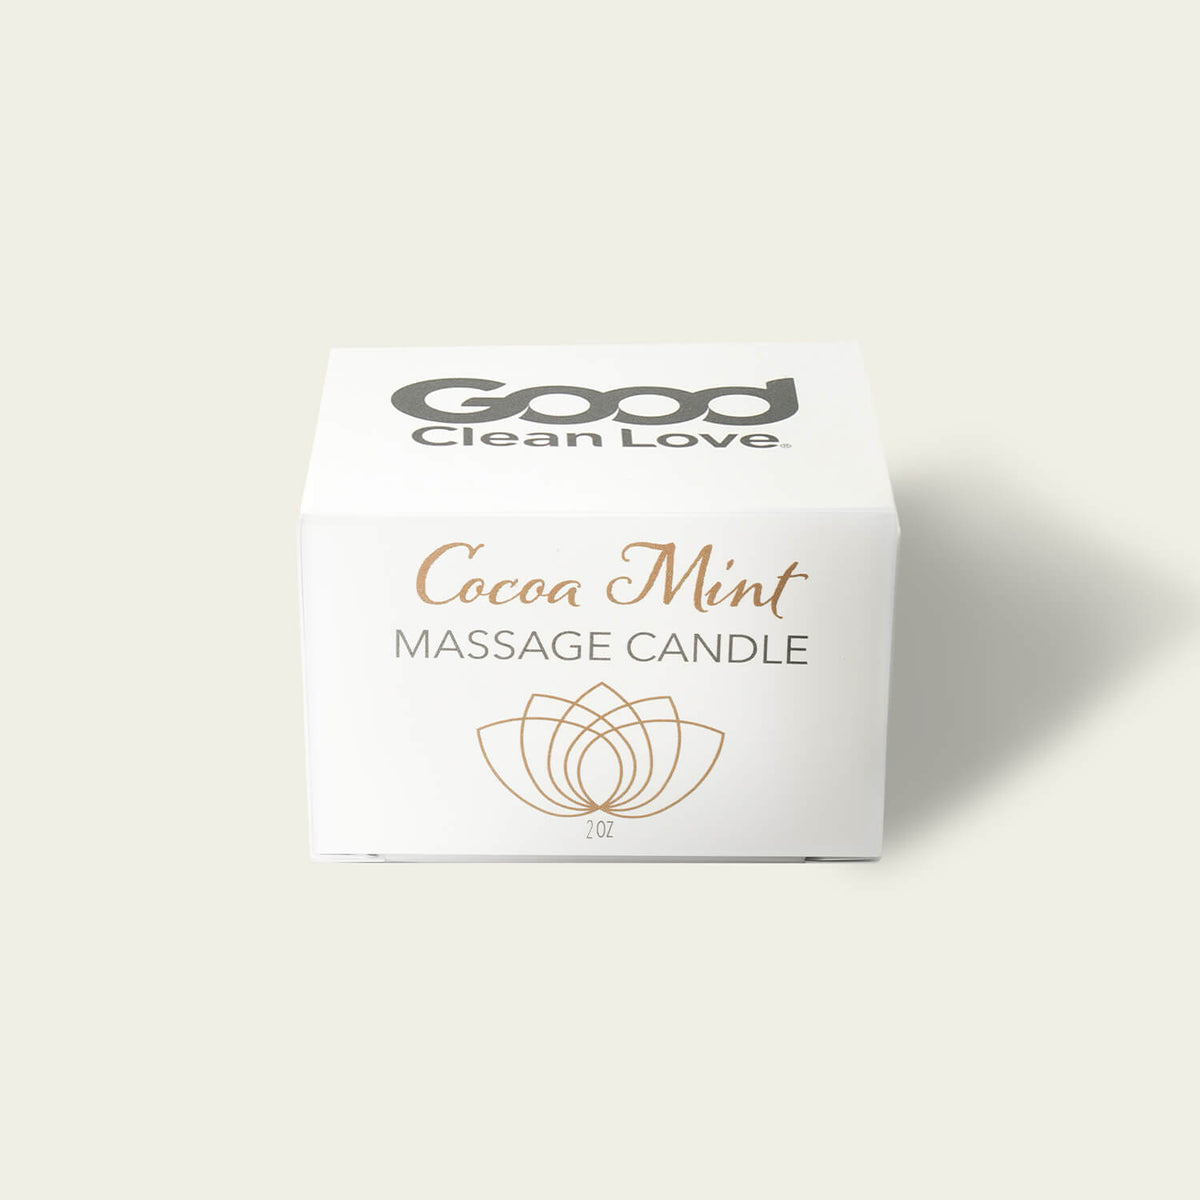 Cocoa Mint Massage Candle 2 oz